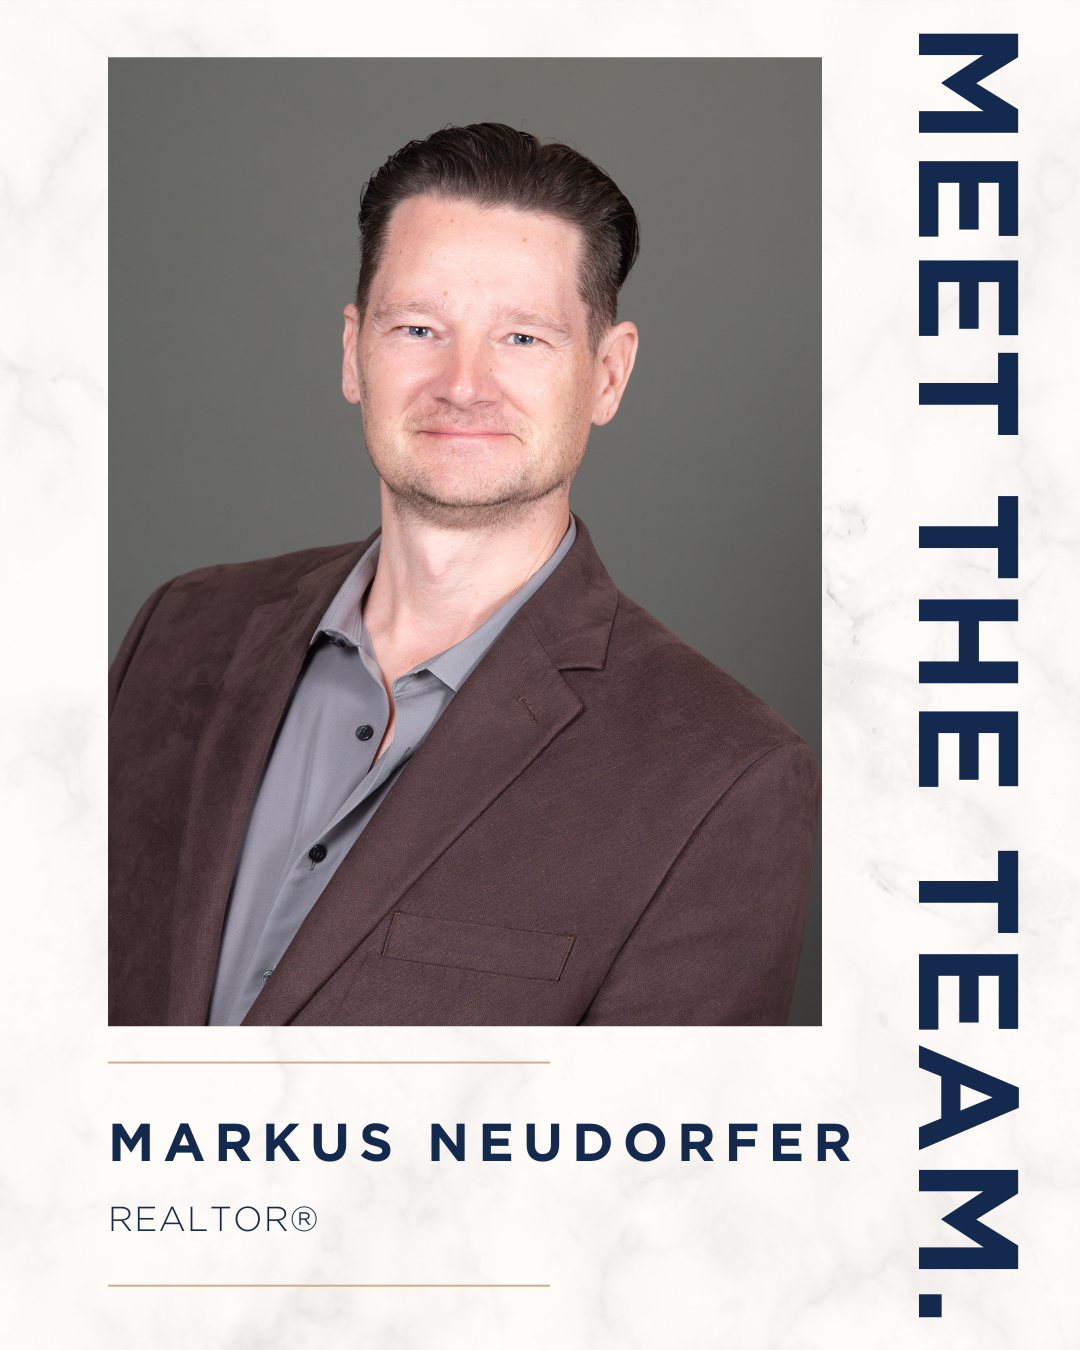 Meet the Team: Markus Neudorfer